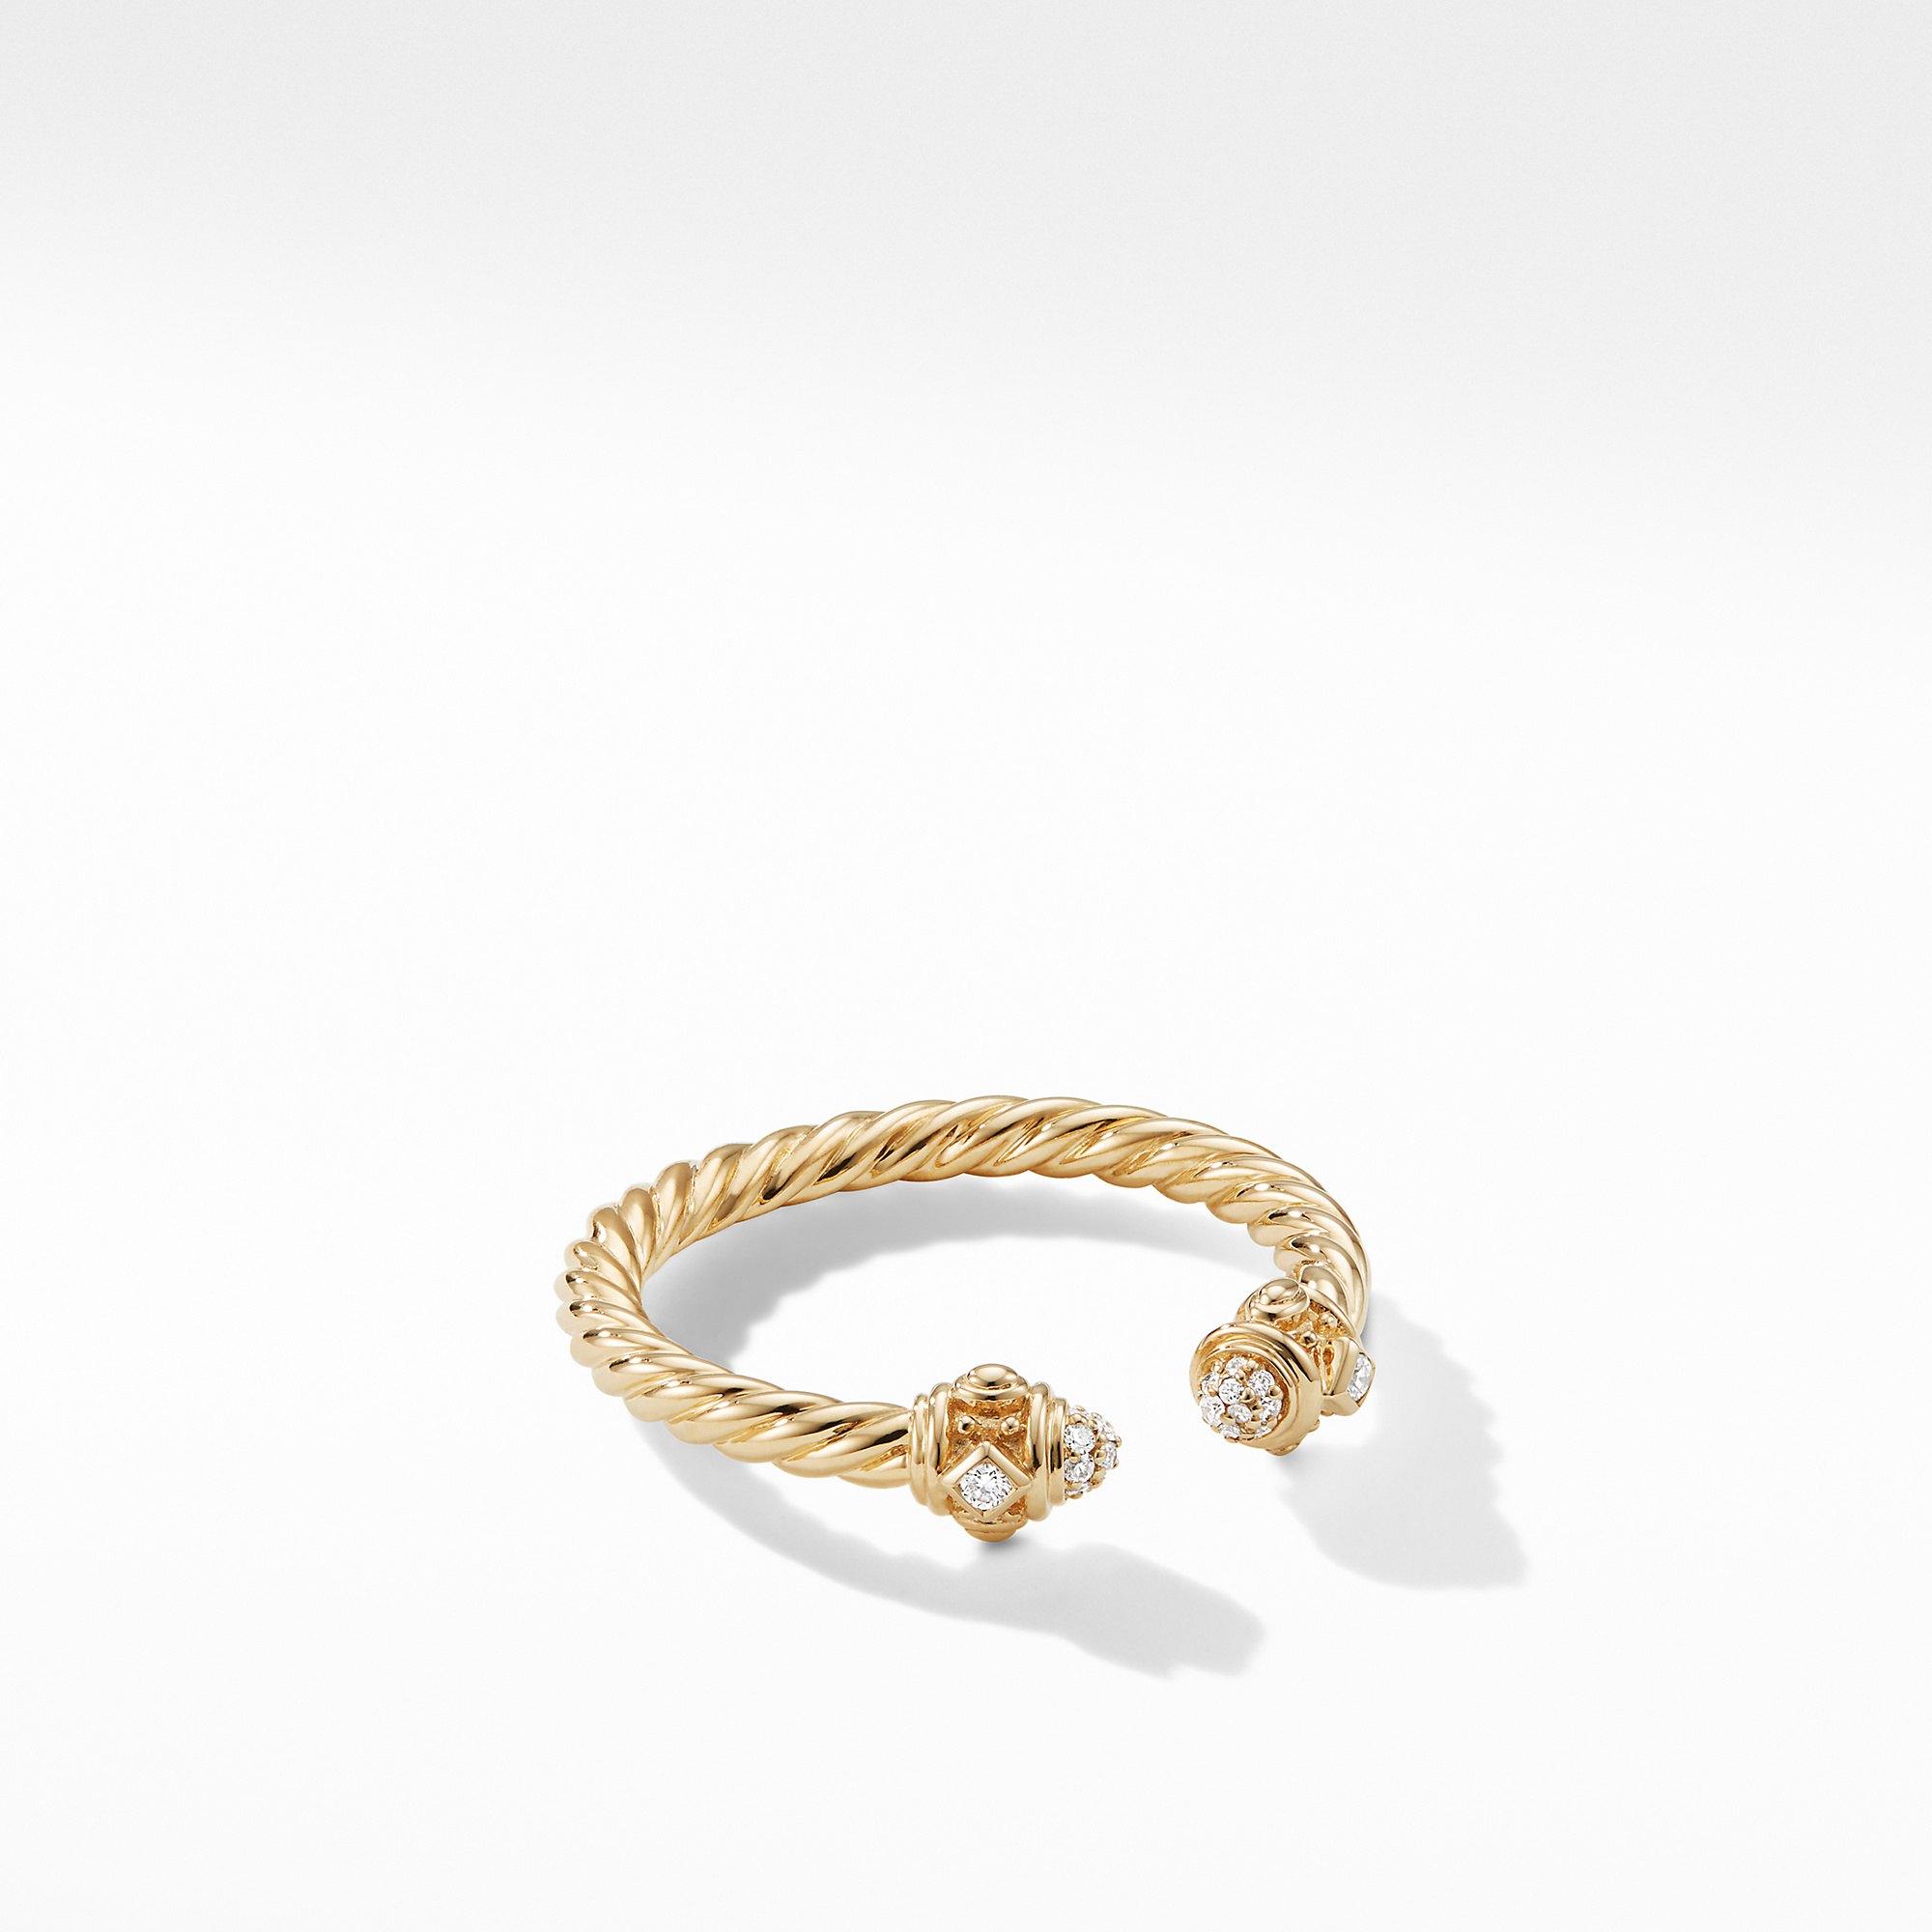 David Yurman Renaissance Ring in 18k Gold with Diamonds, size 7